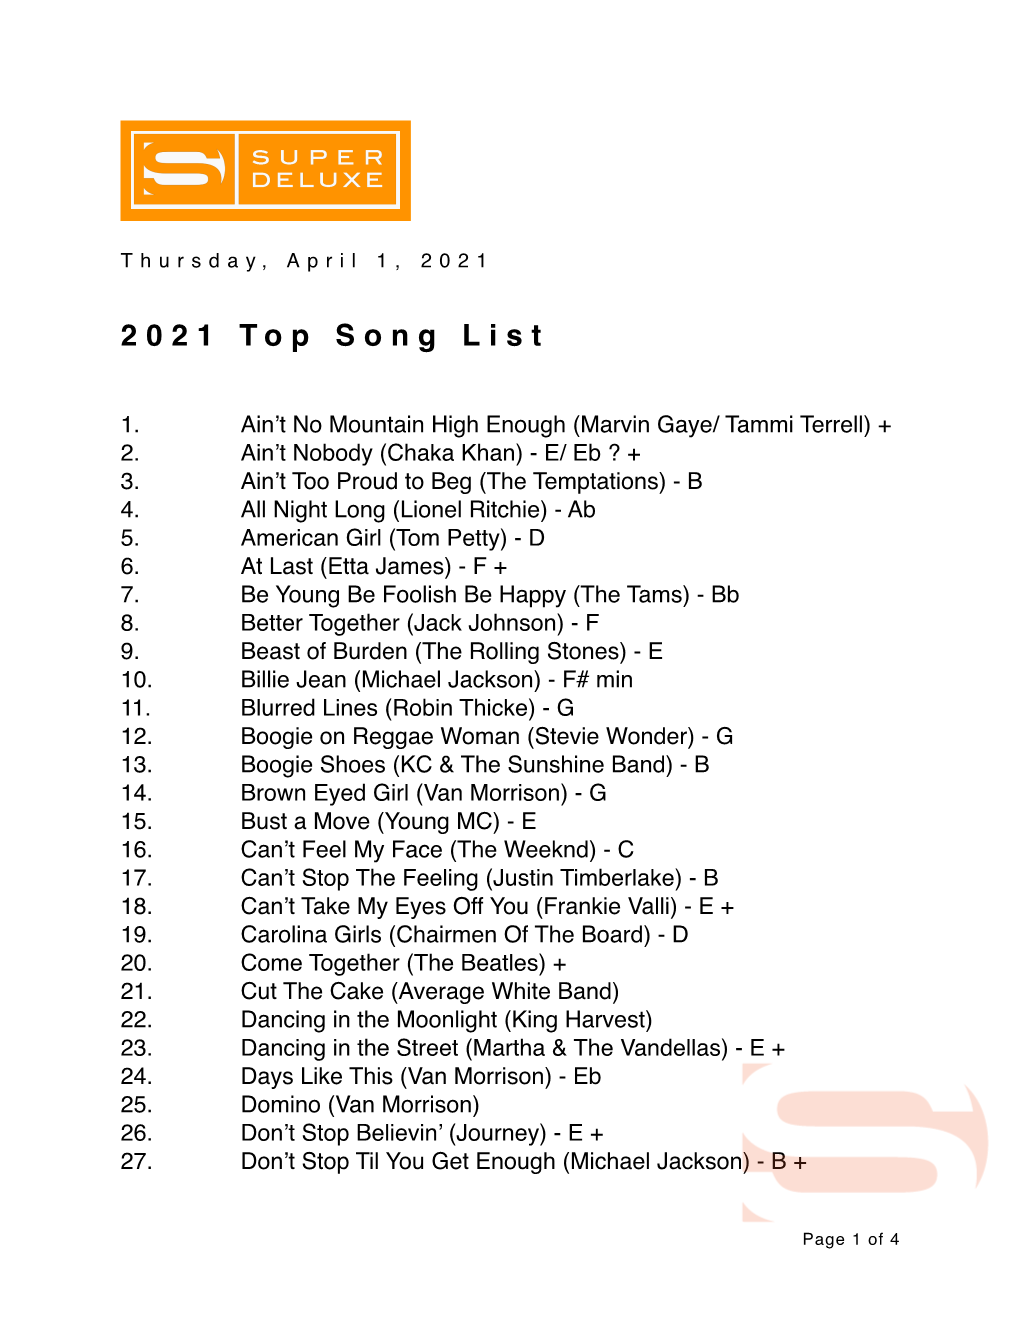 2021 Top Song List